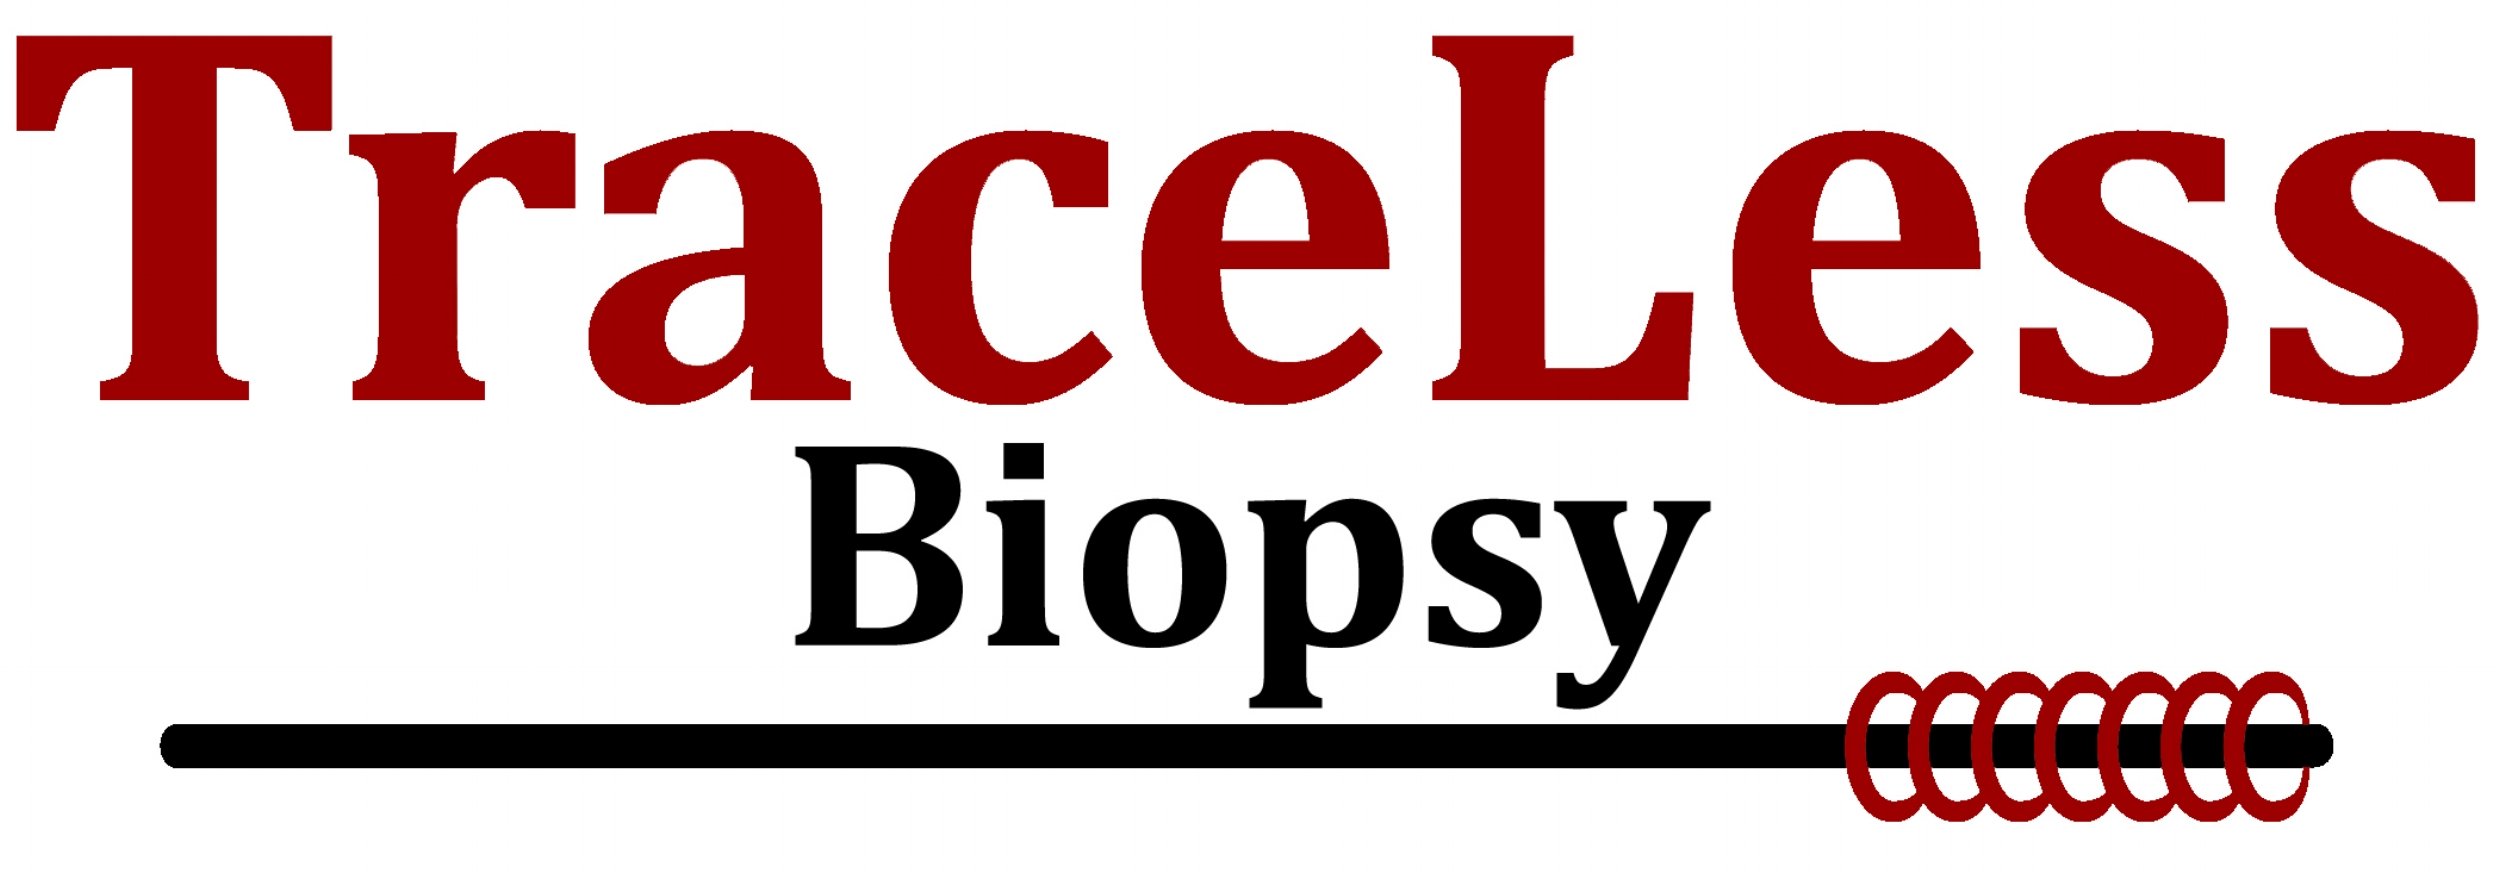 TraceLess Biopsy